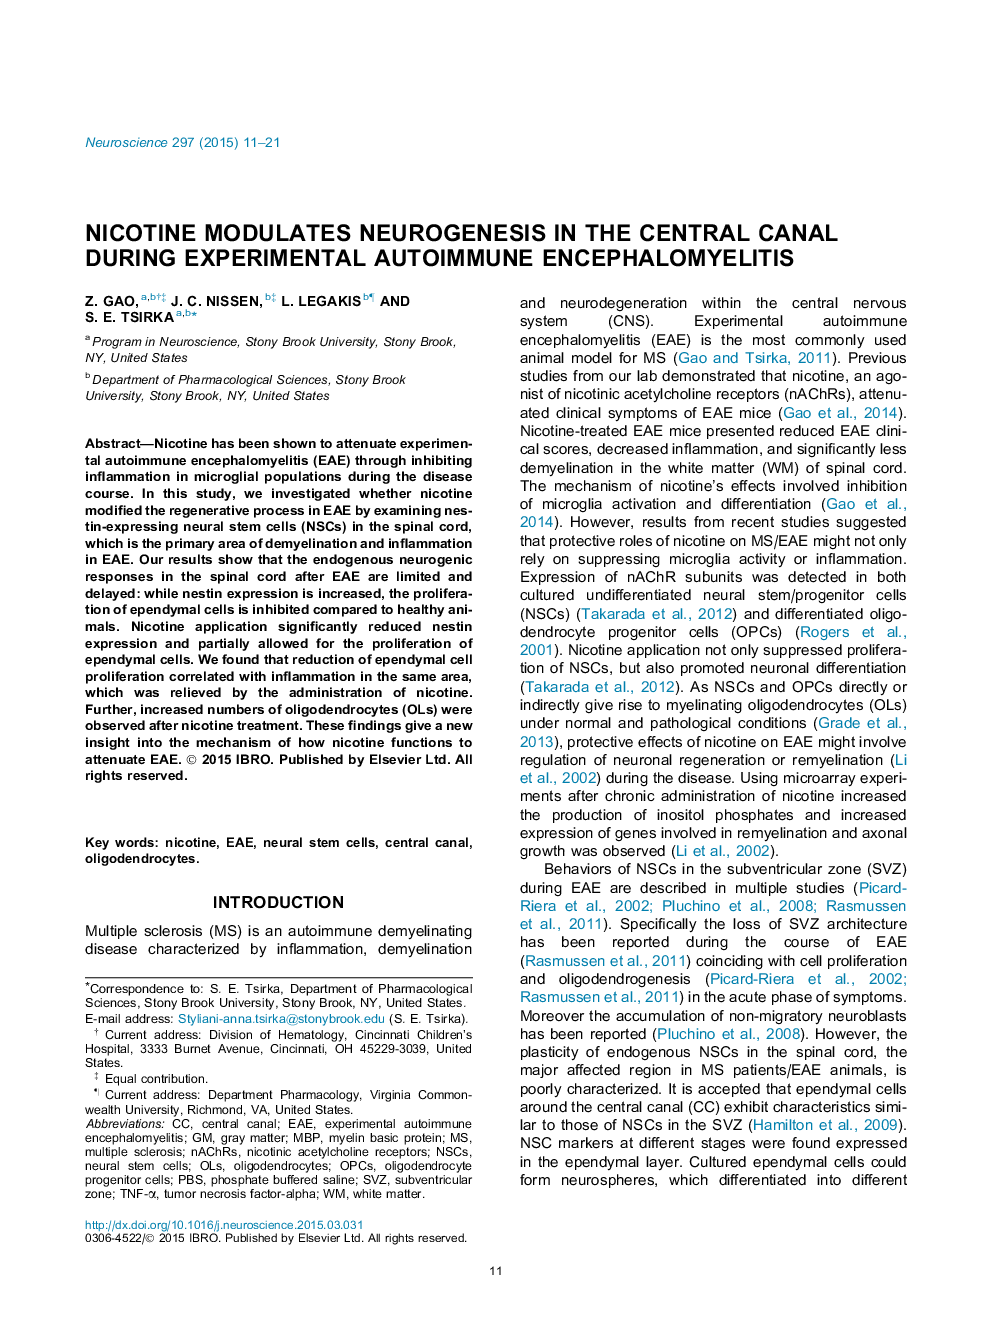 Nicotine modulates neurogenesis in the central canal during experimental autoimmune encephalomyelitis